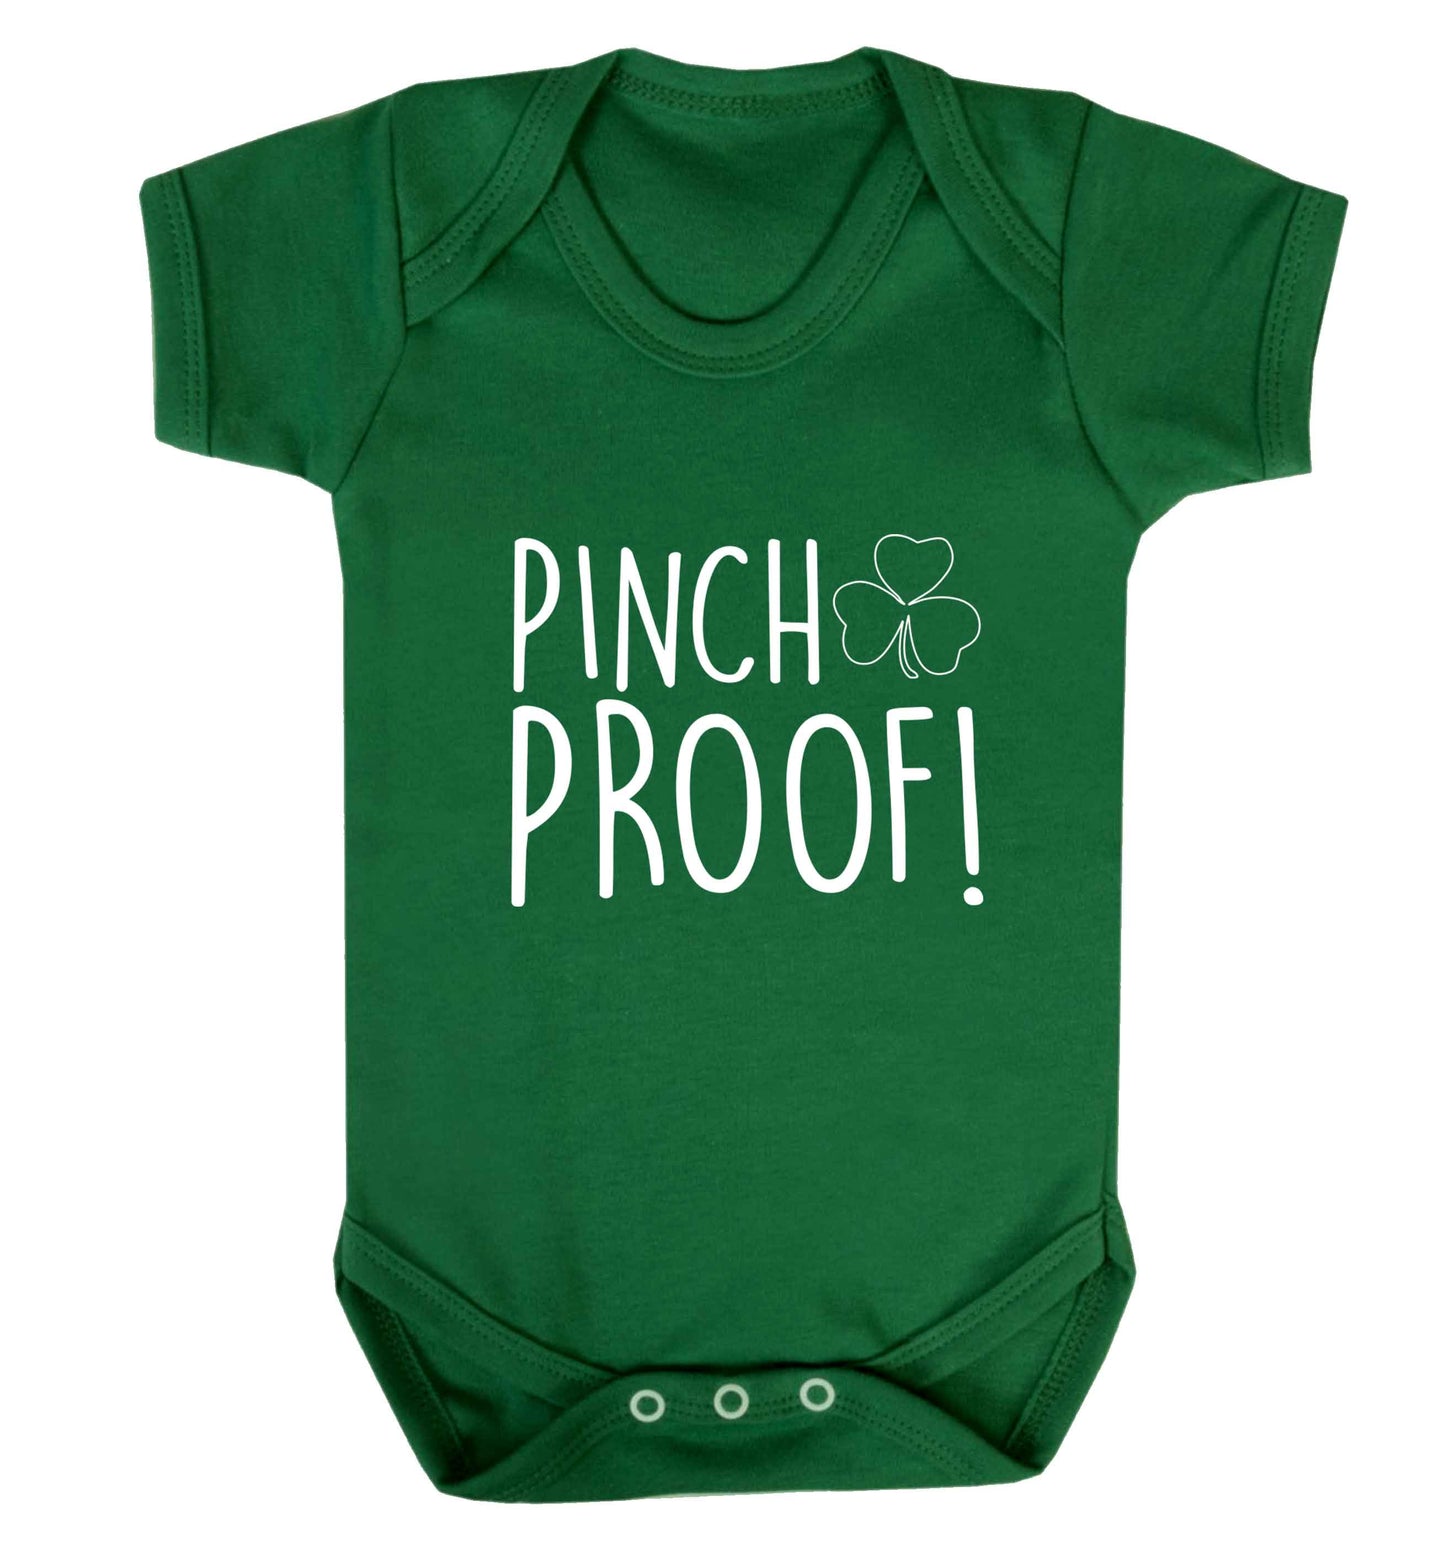 Pinch Proof baby vest green 18-24 months